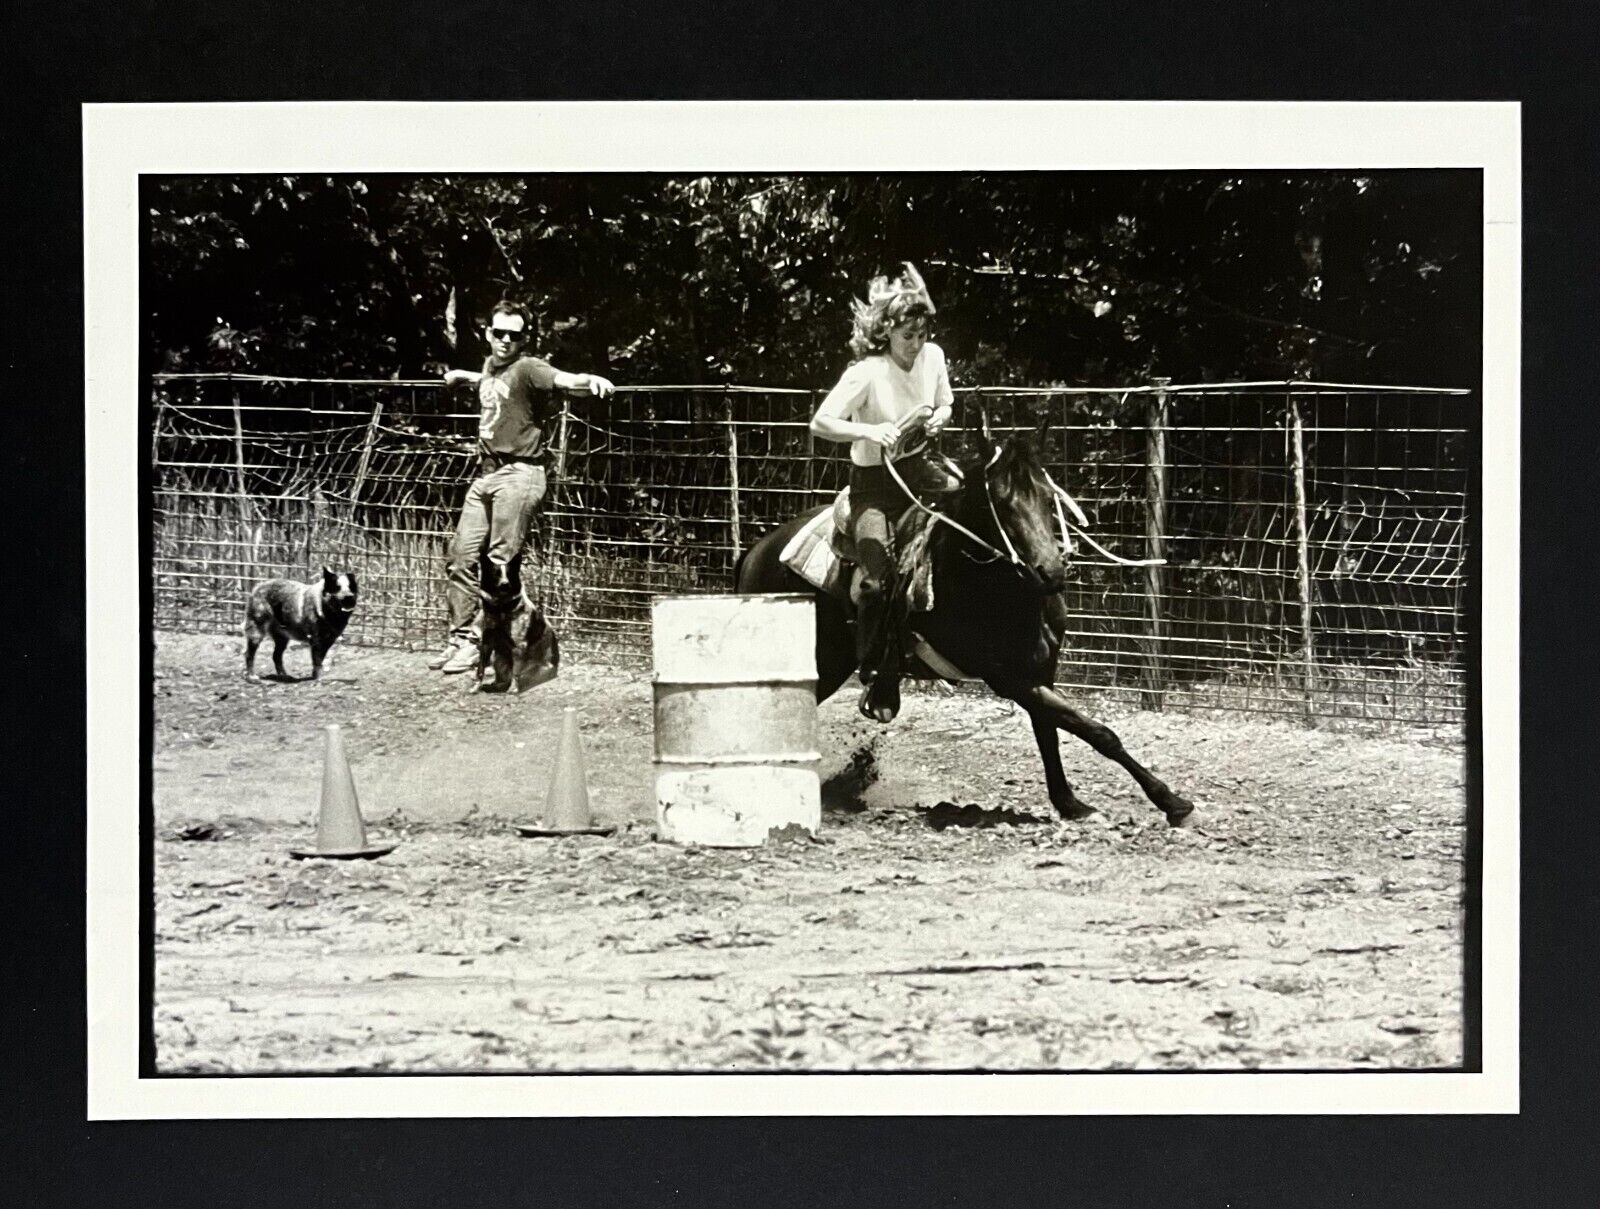 1991 Olathe Kansas Horse Farm Female Barrel Racer Rodeo Practice VTG Press Photo